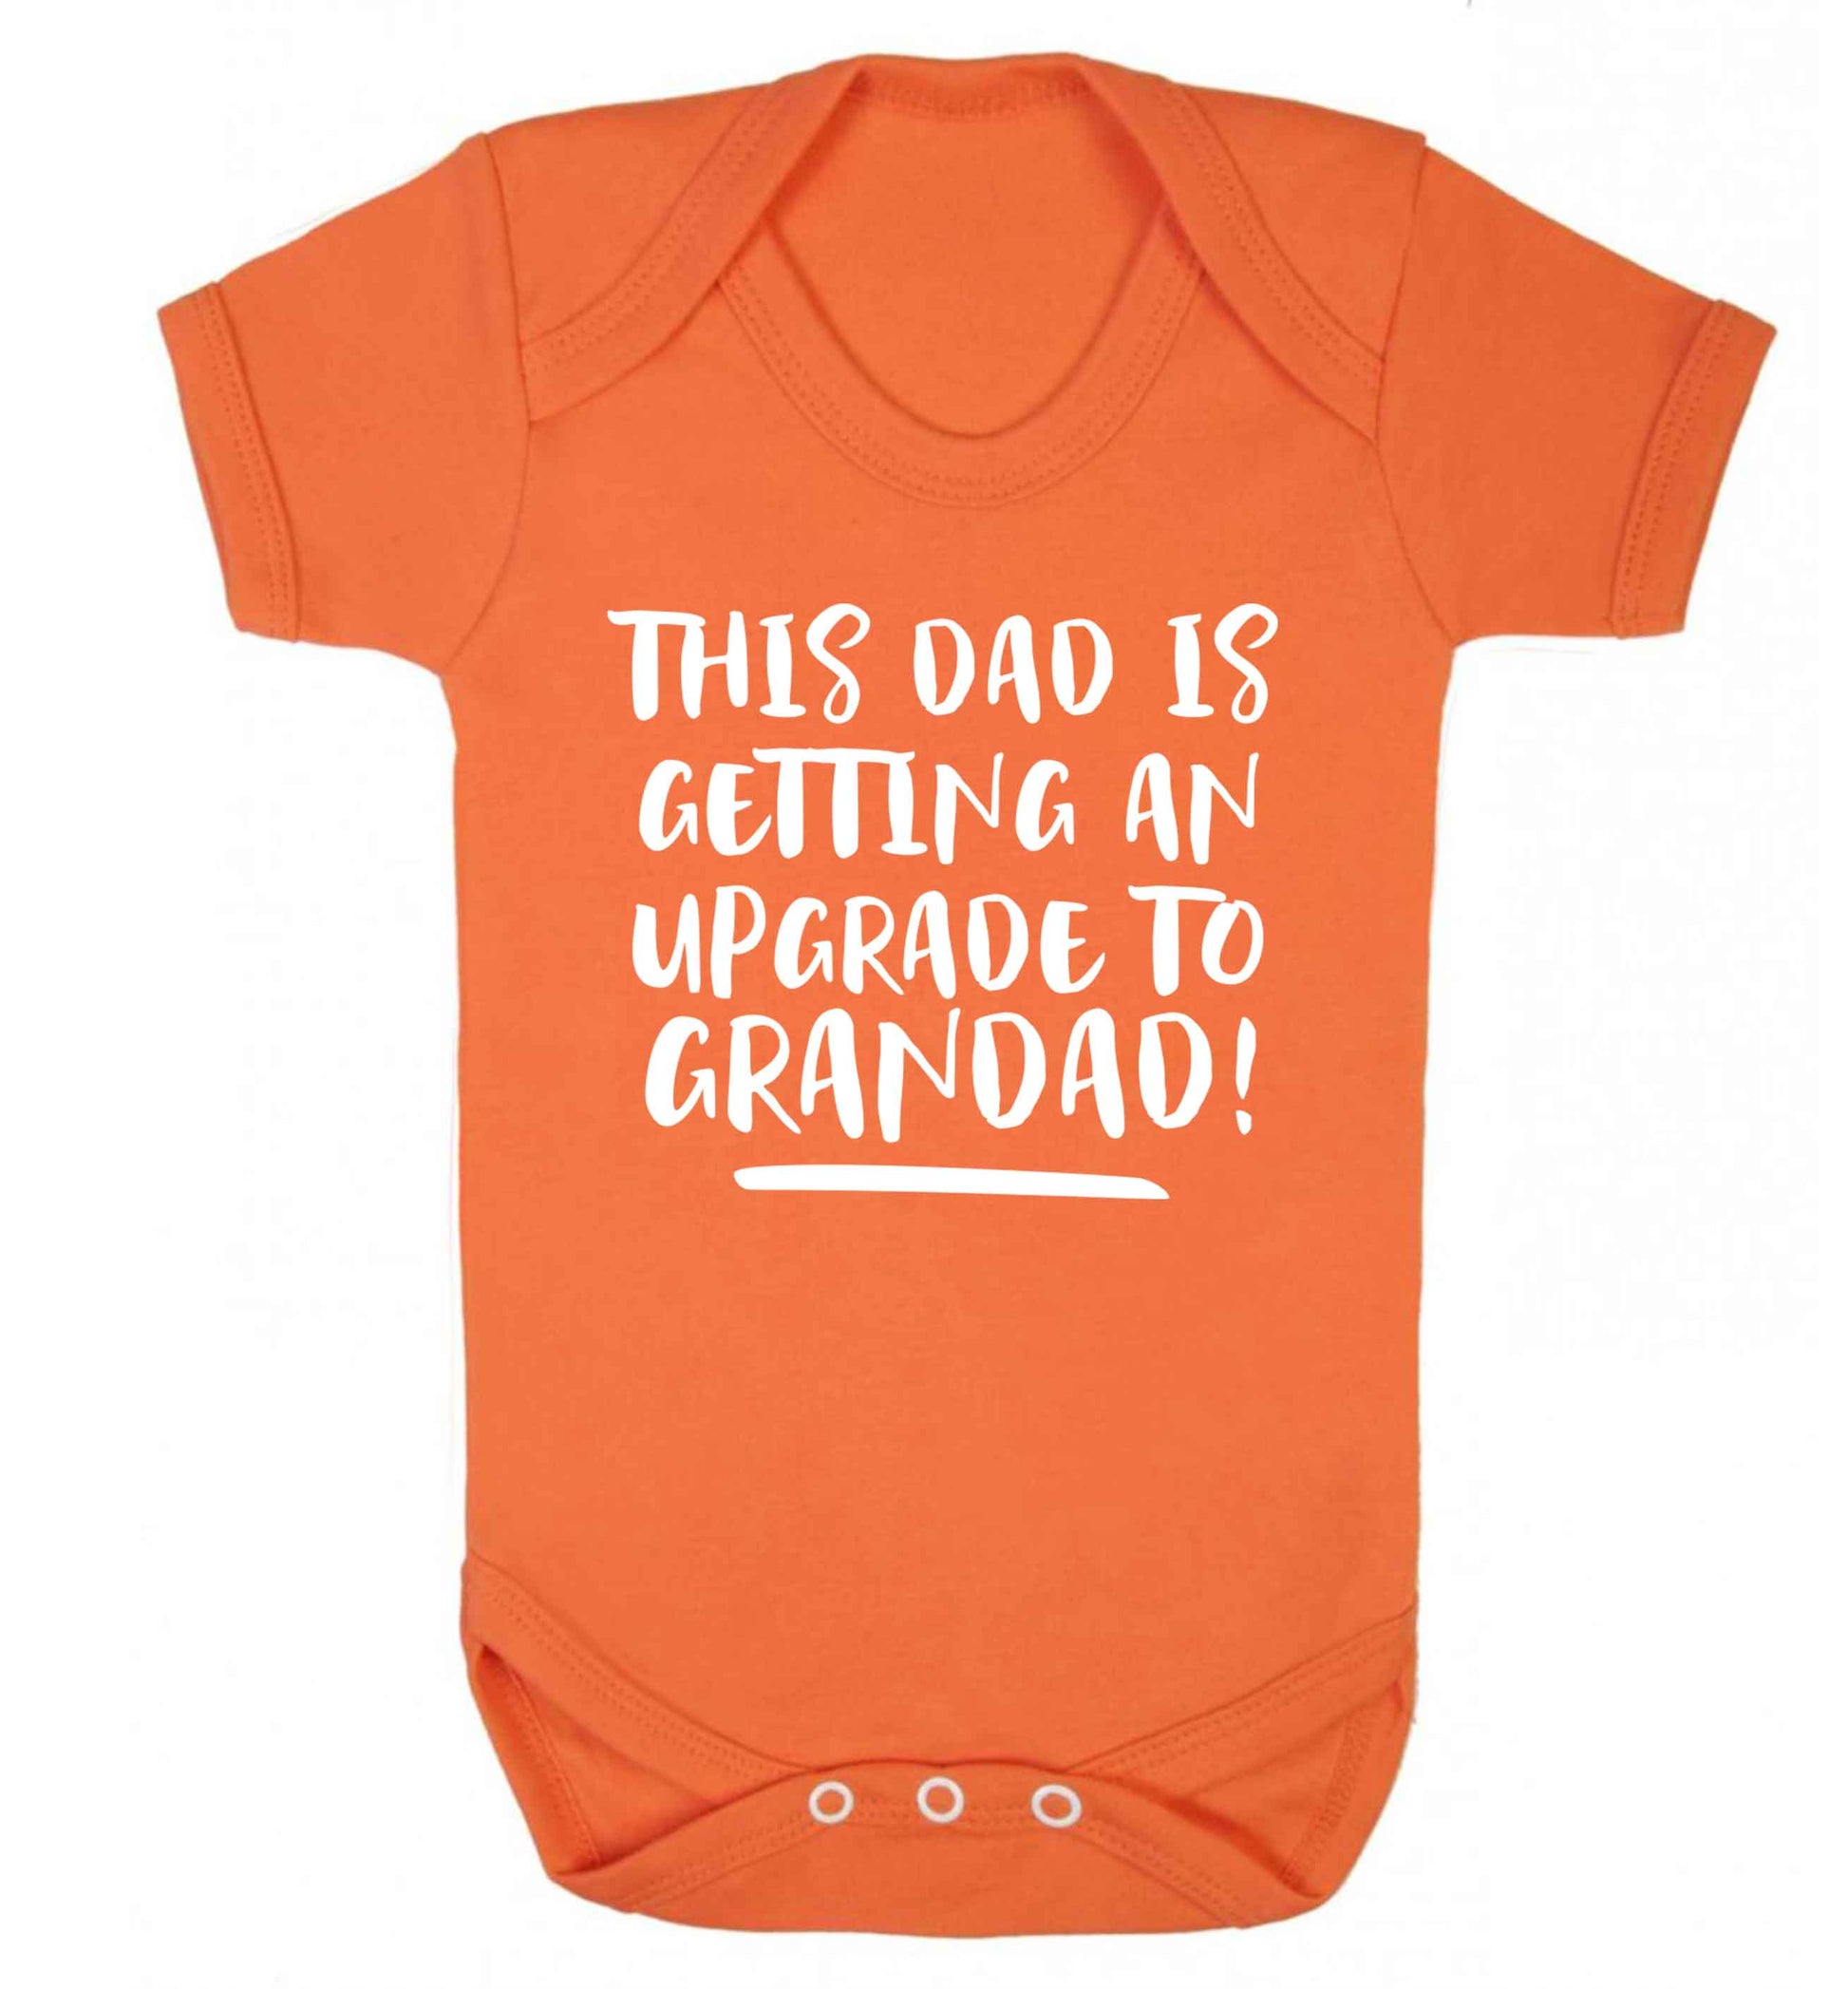 This dad is getting an upgrade to grandad! Baby Vest orange 18-24 months